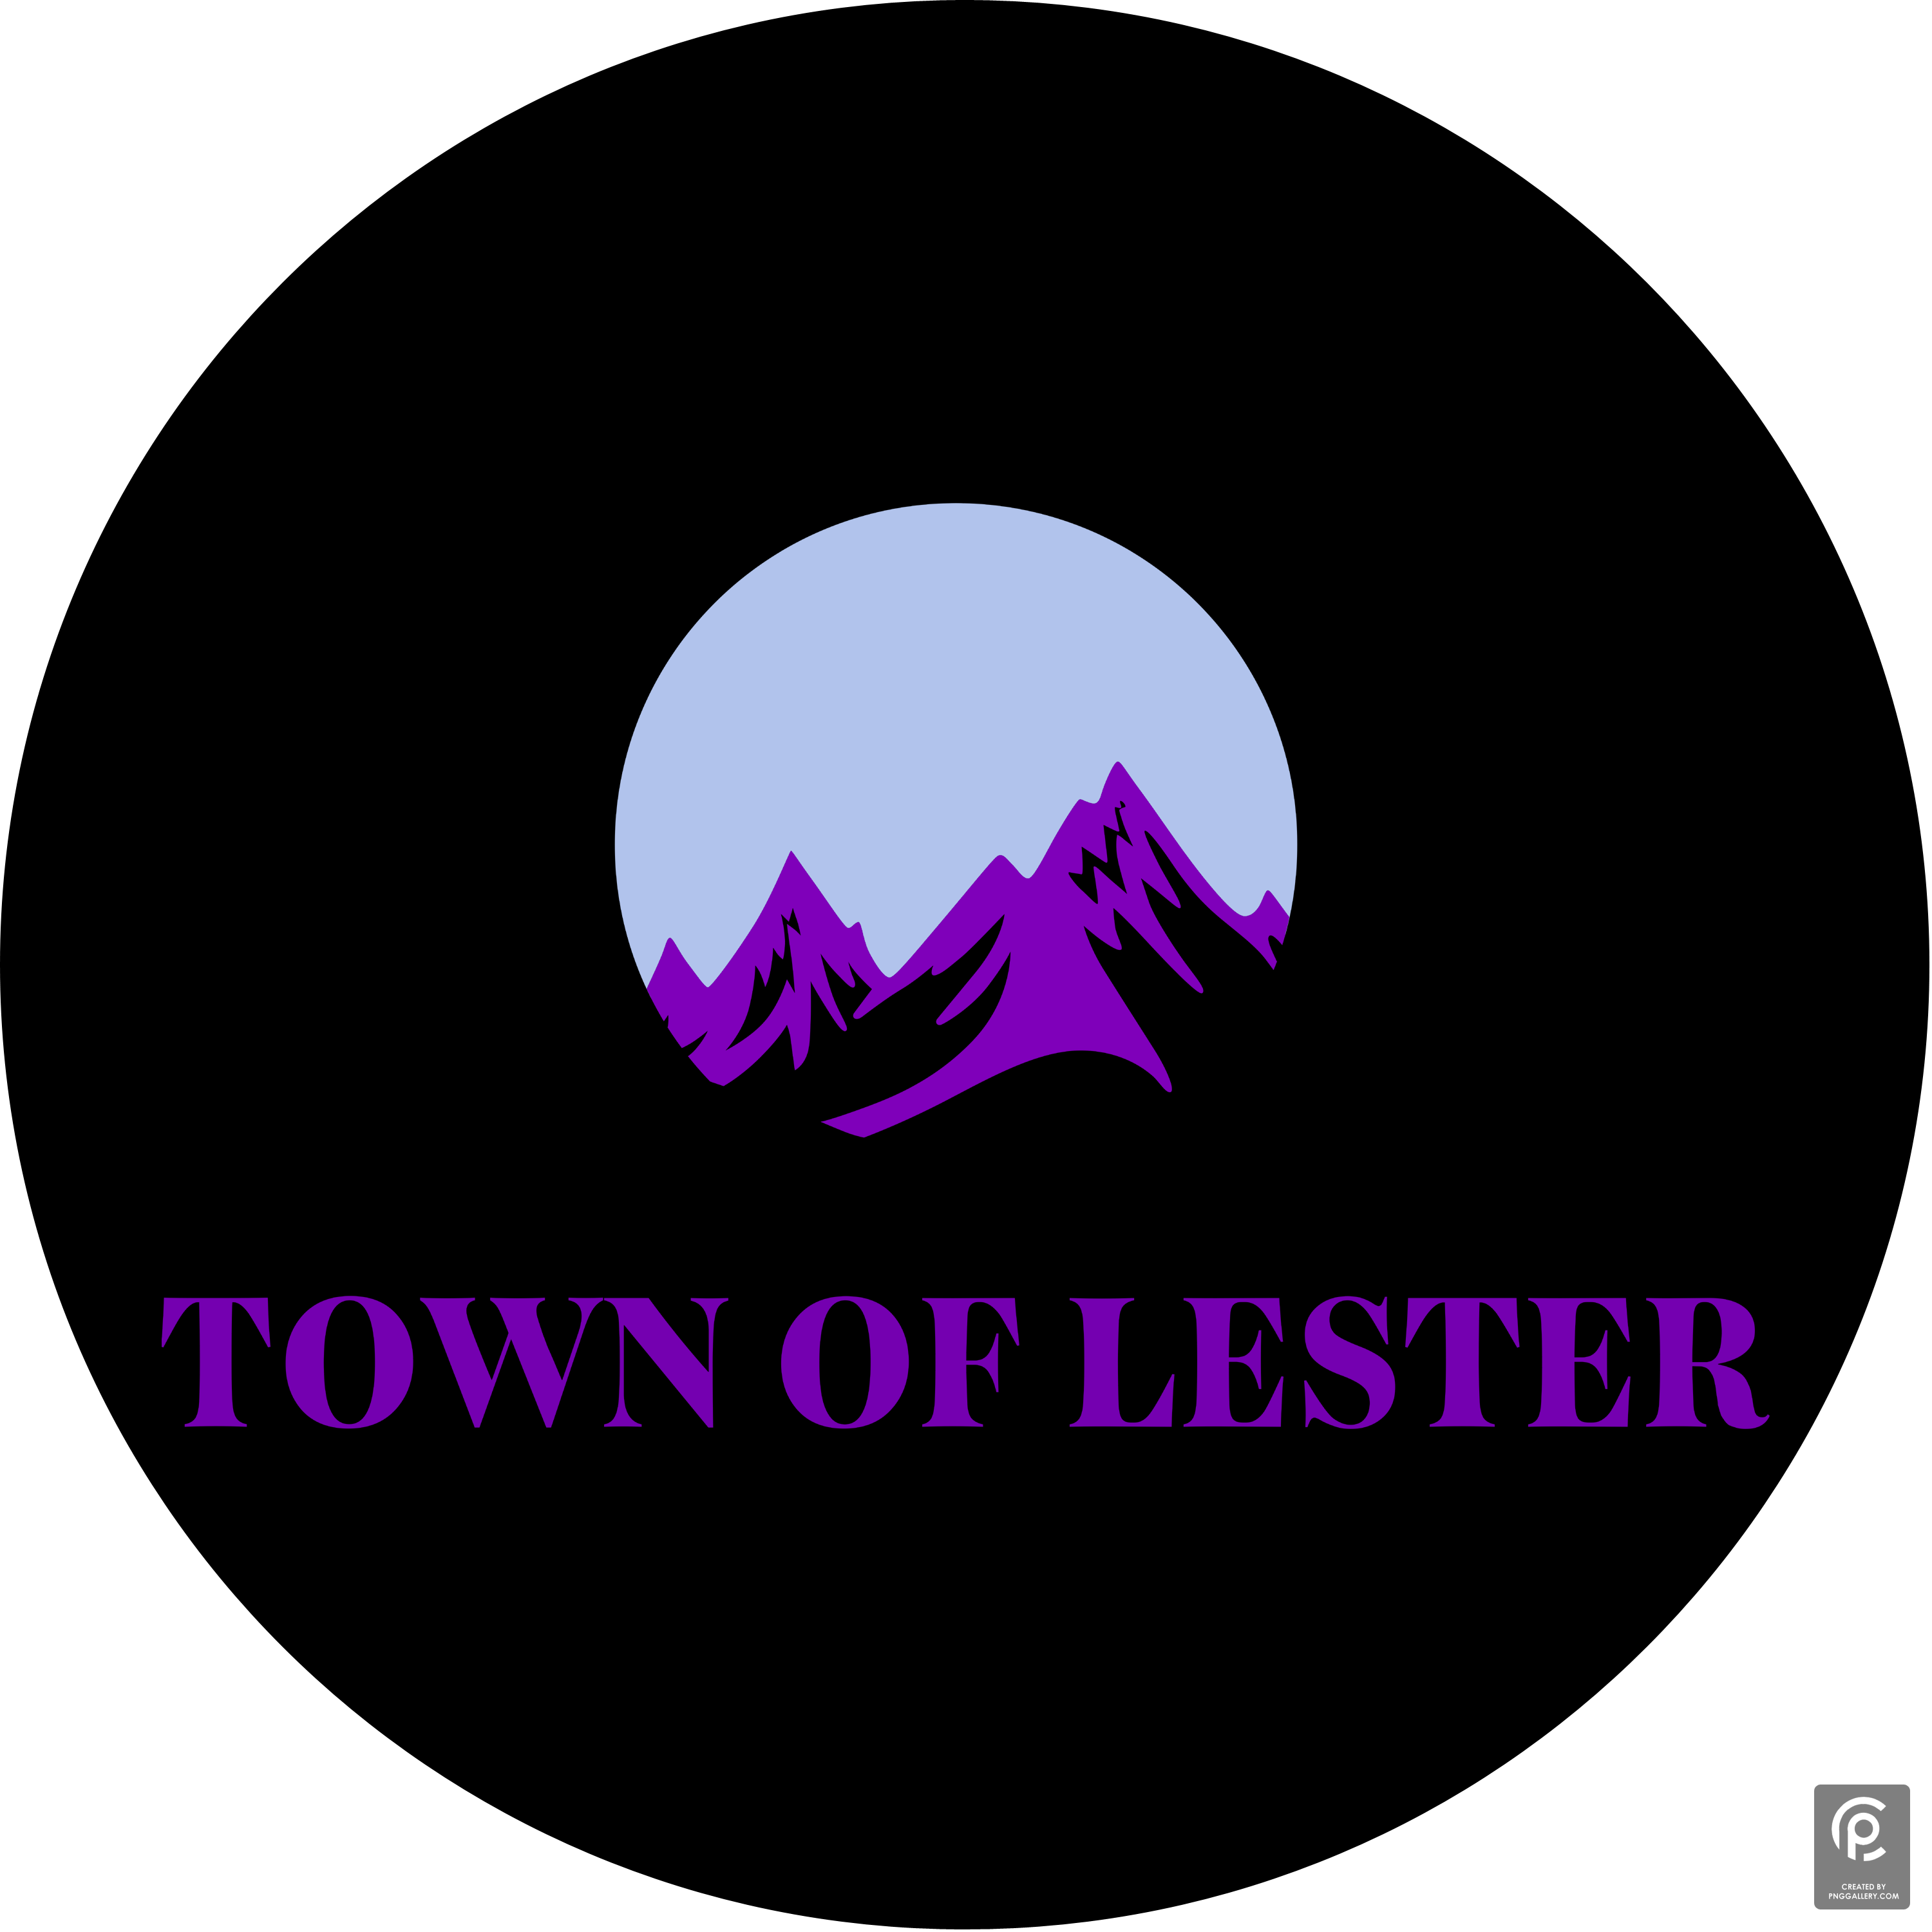 Lester West Virginia Logo Transparent Clipart